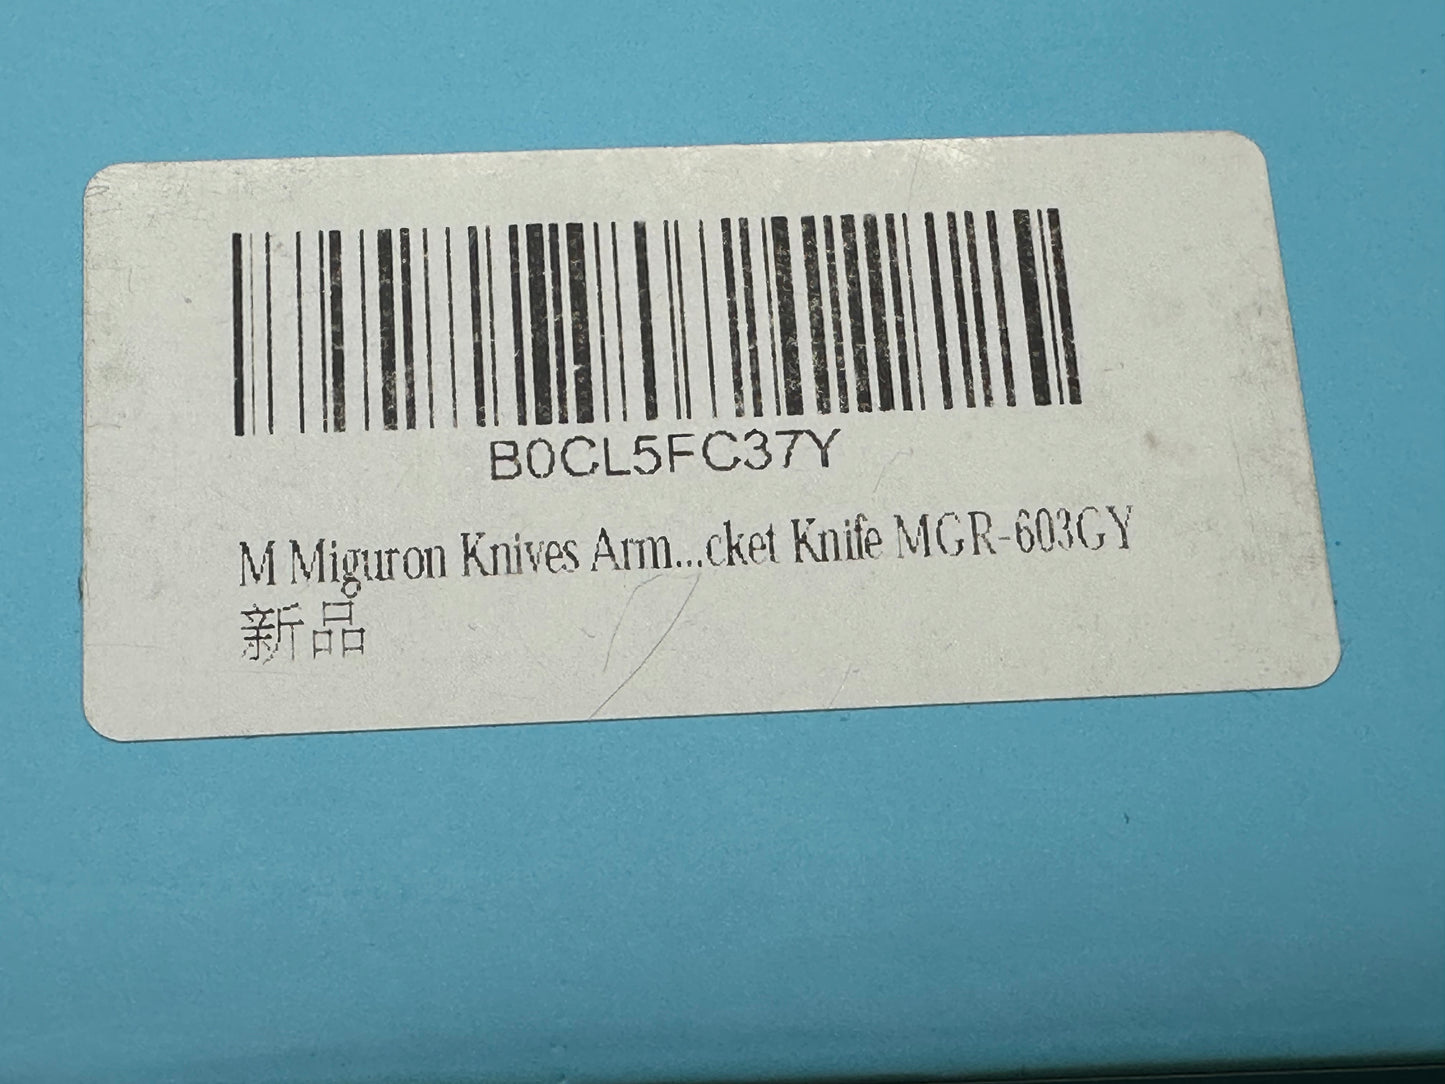 Miguron Arma 3.75” M390 Satin Blade with Titanium Handle in Dark Gray